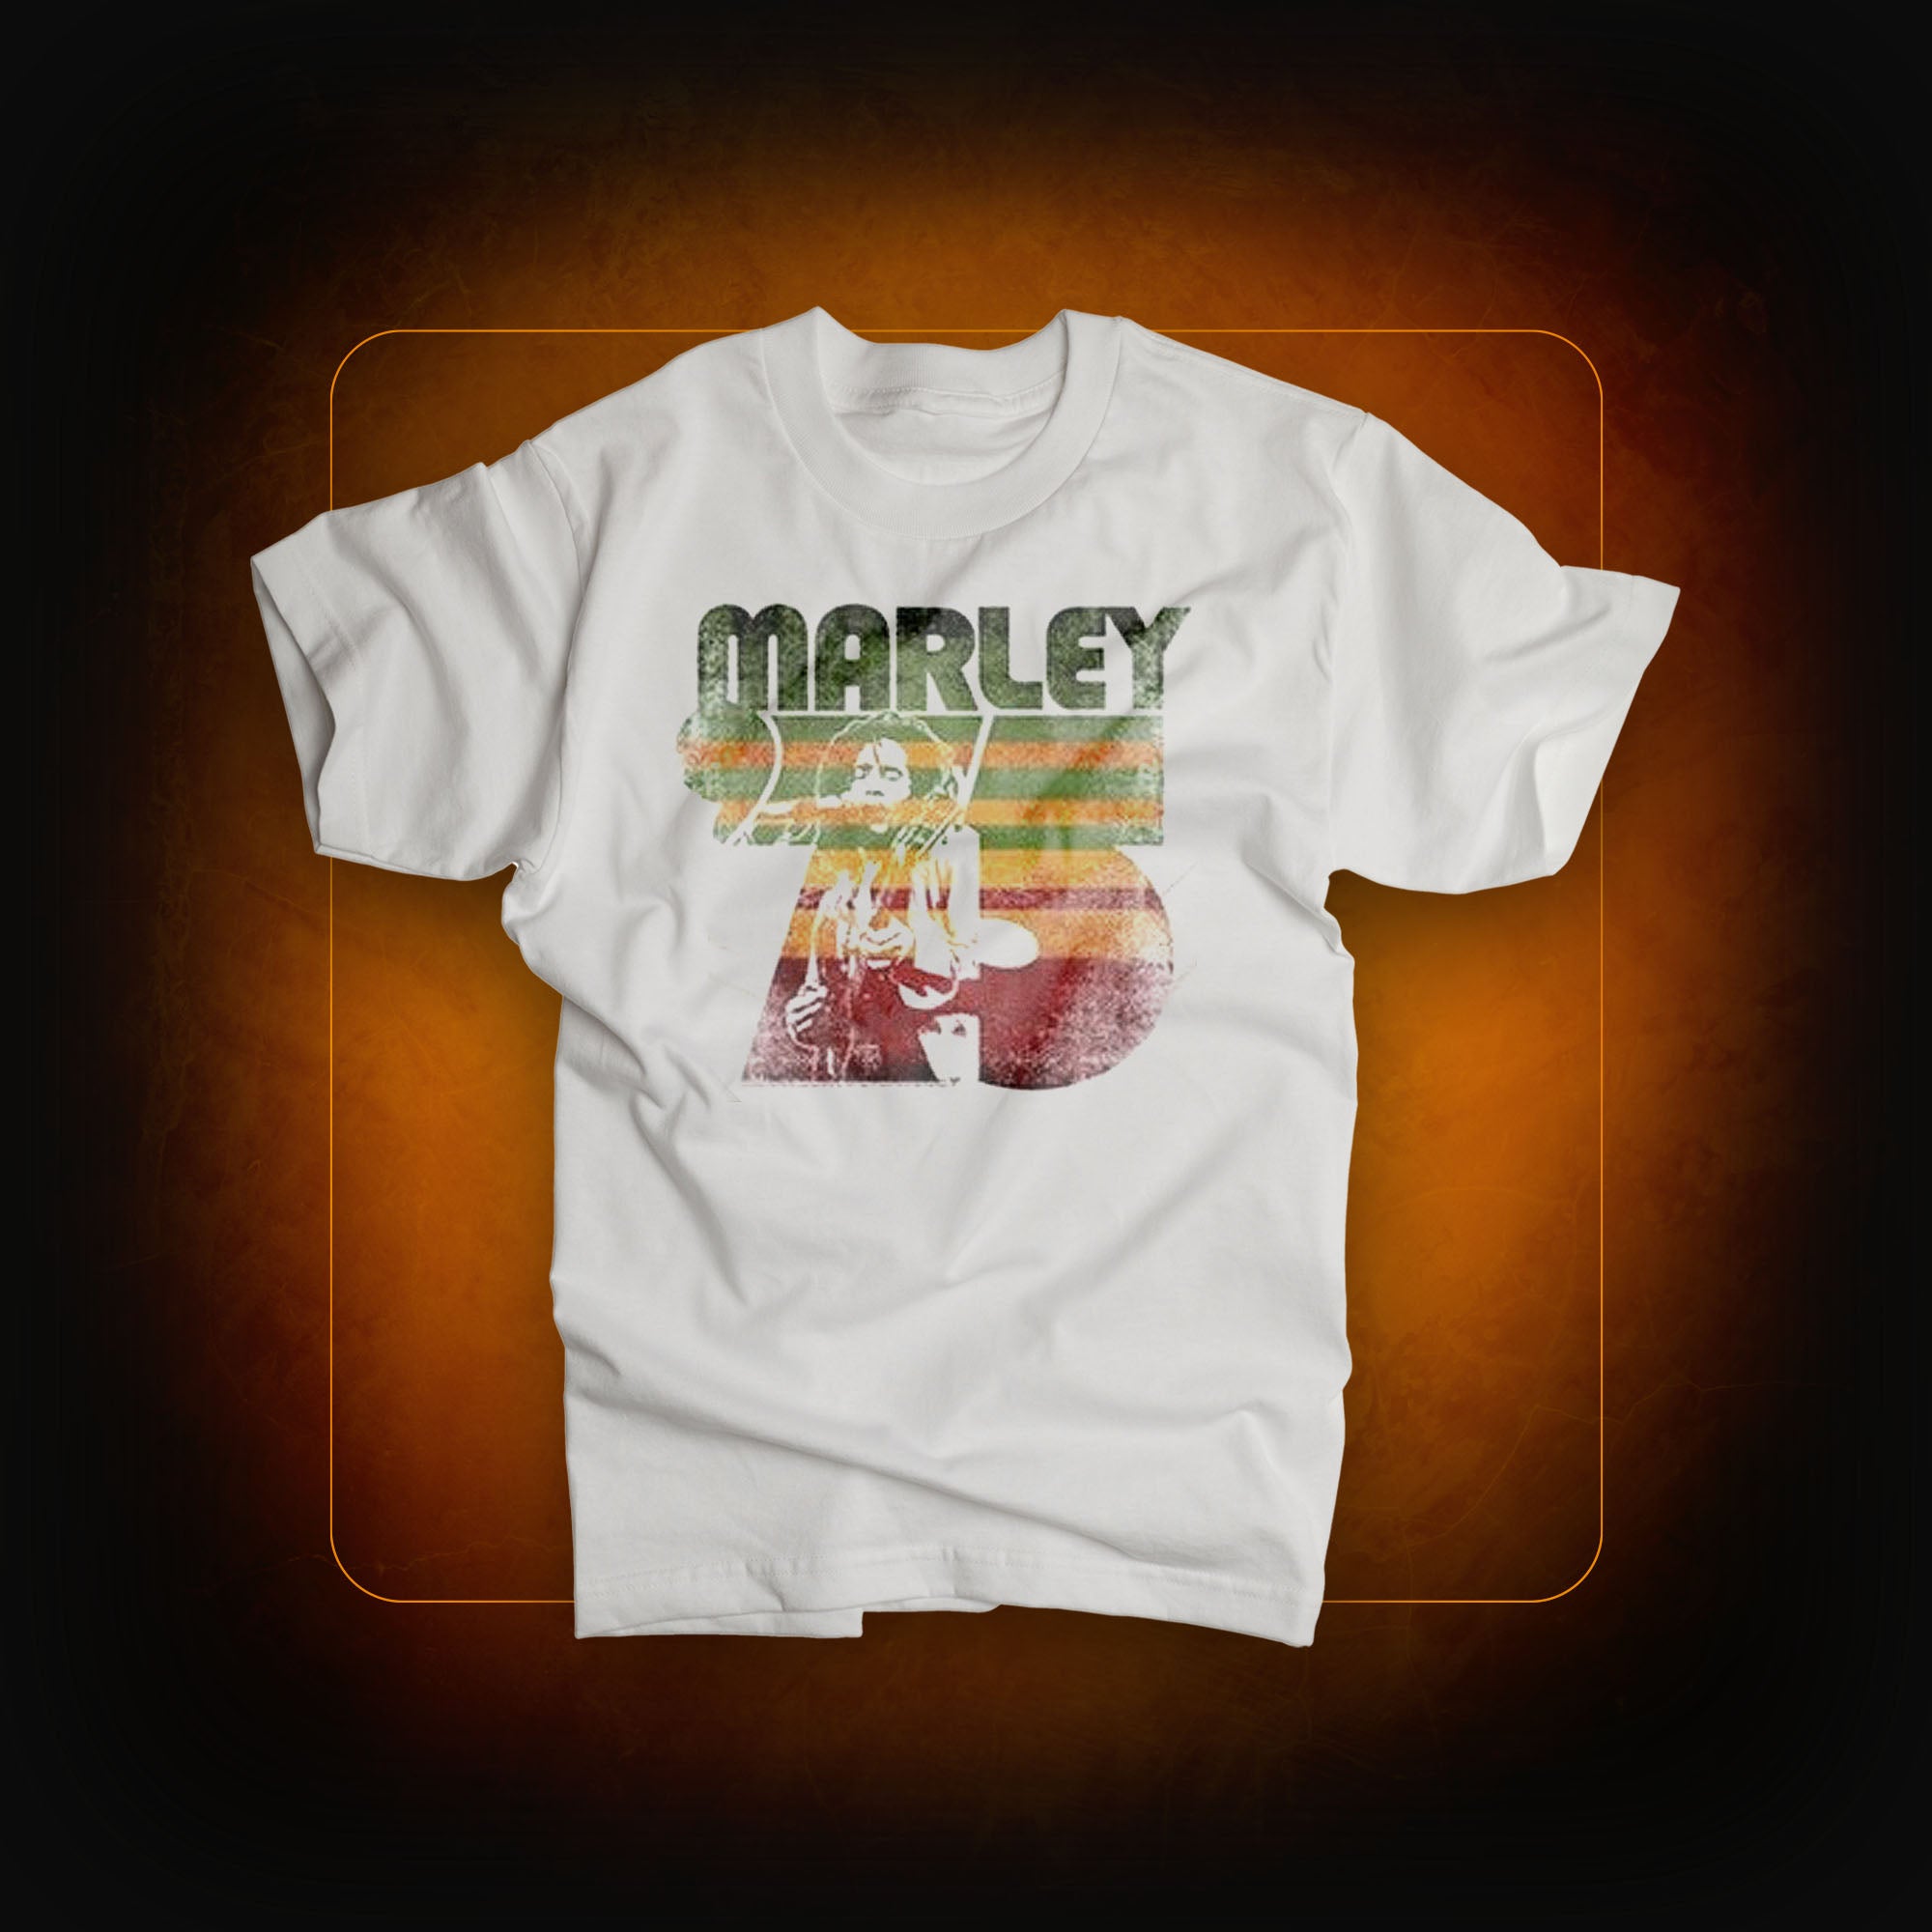 Bob Marley 75 t-shirt - Bob Marley